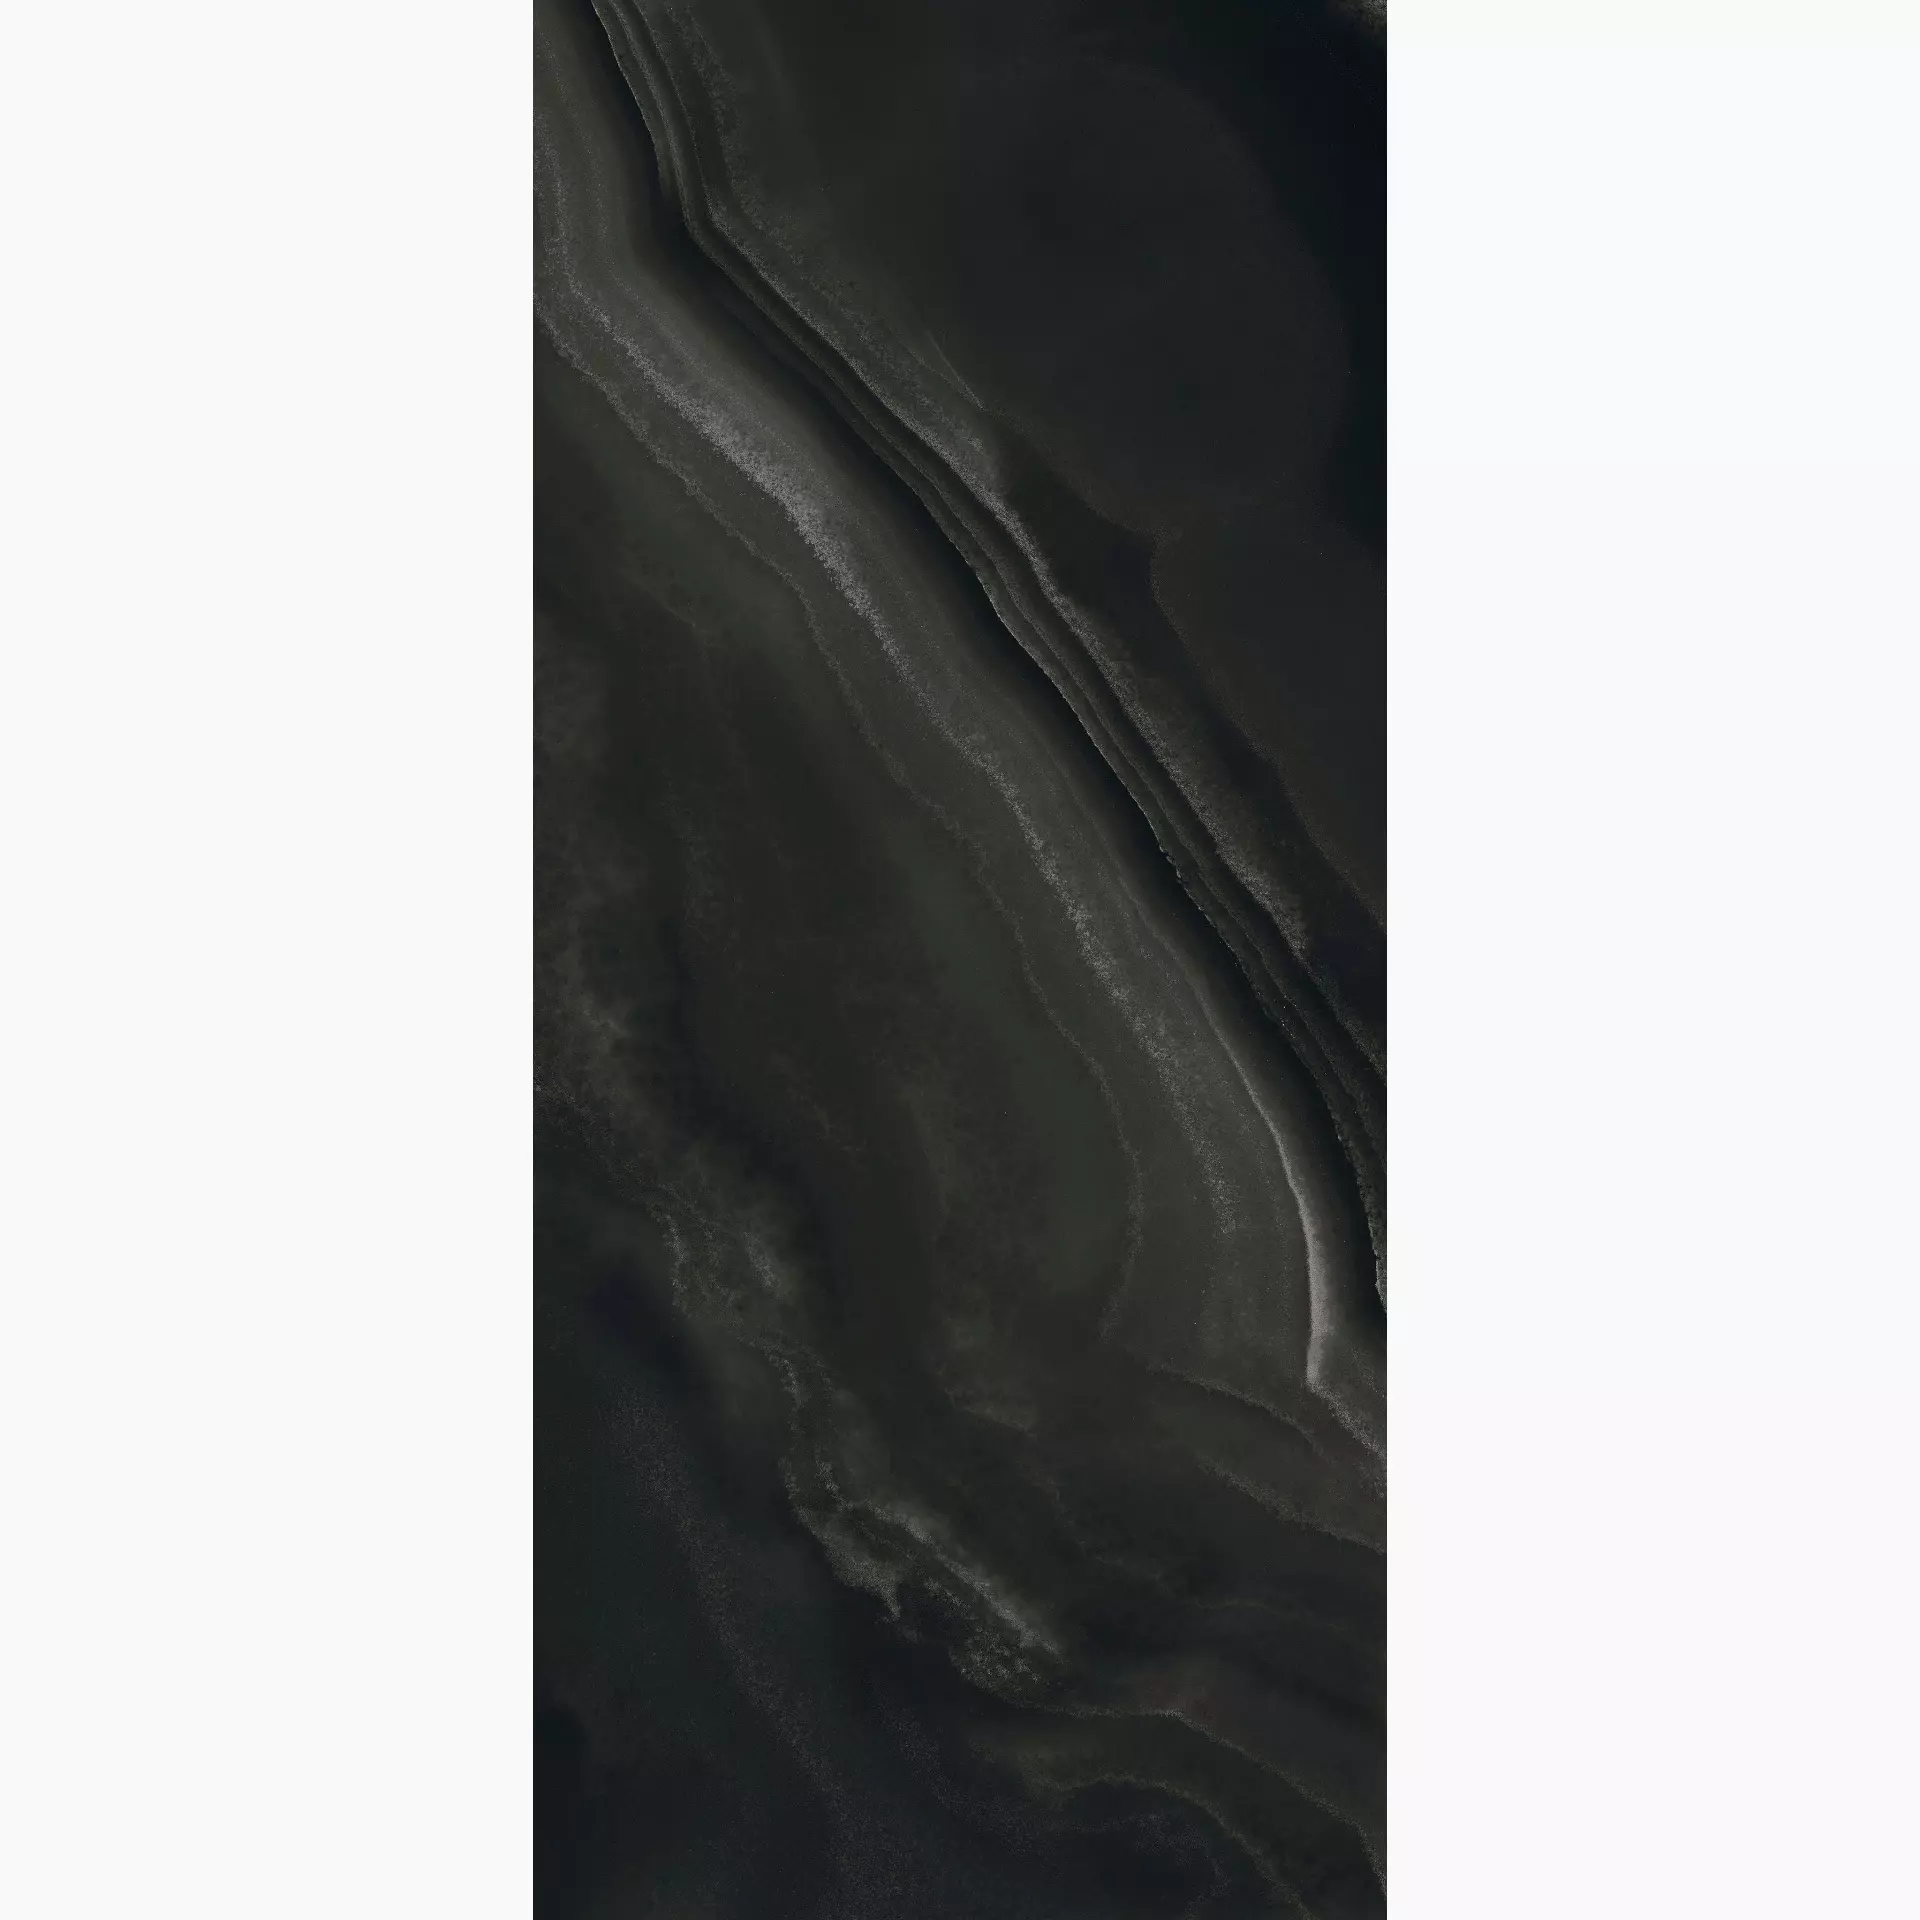 Florim Eccentric Luxe Smoky Black Glossy 778832 80x180cm rectified 9mm